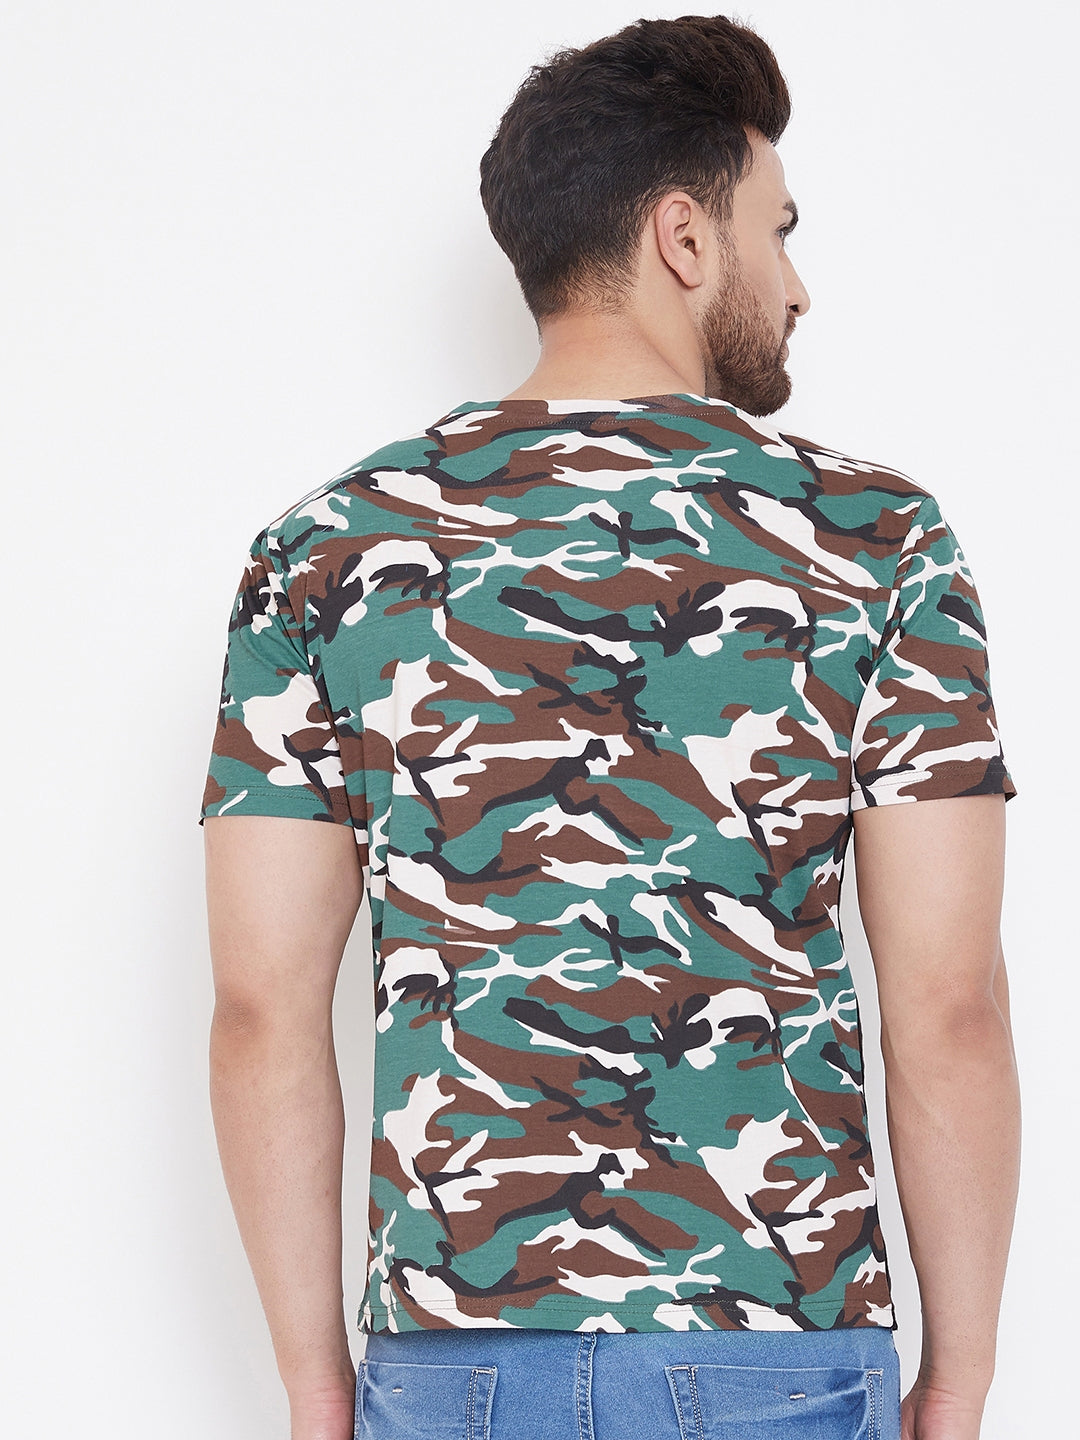 Black/Army Camo Print Men's Half Sleeves Round Neck T-Shirt